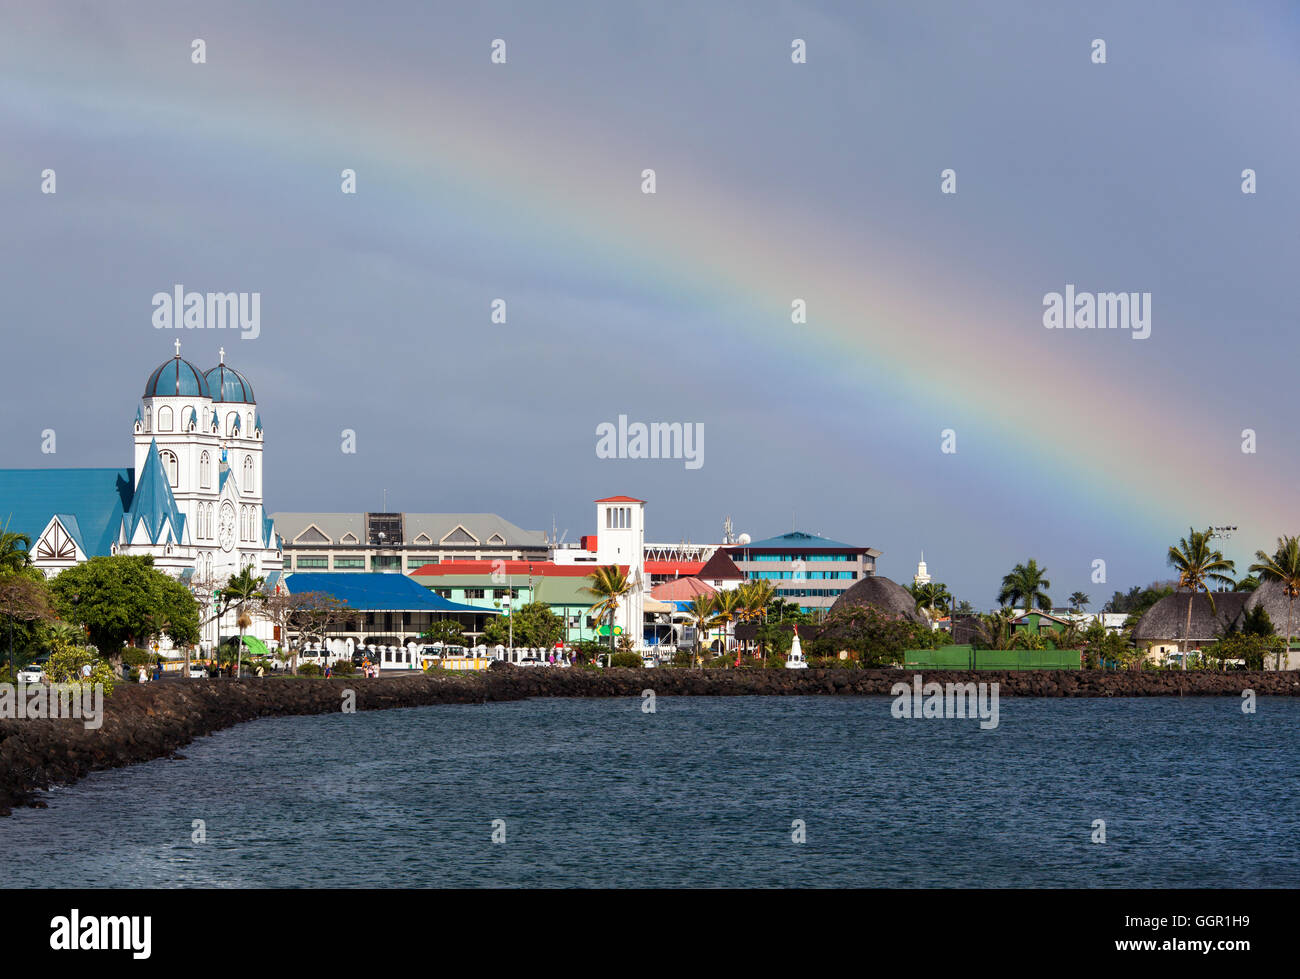 La vista de una mañana de arco iris sobre la ciudad en la isla de Upolu Apia (Samoa). Foto de stock